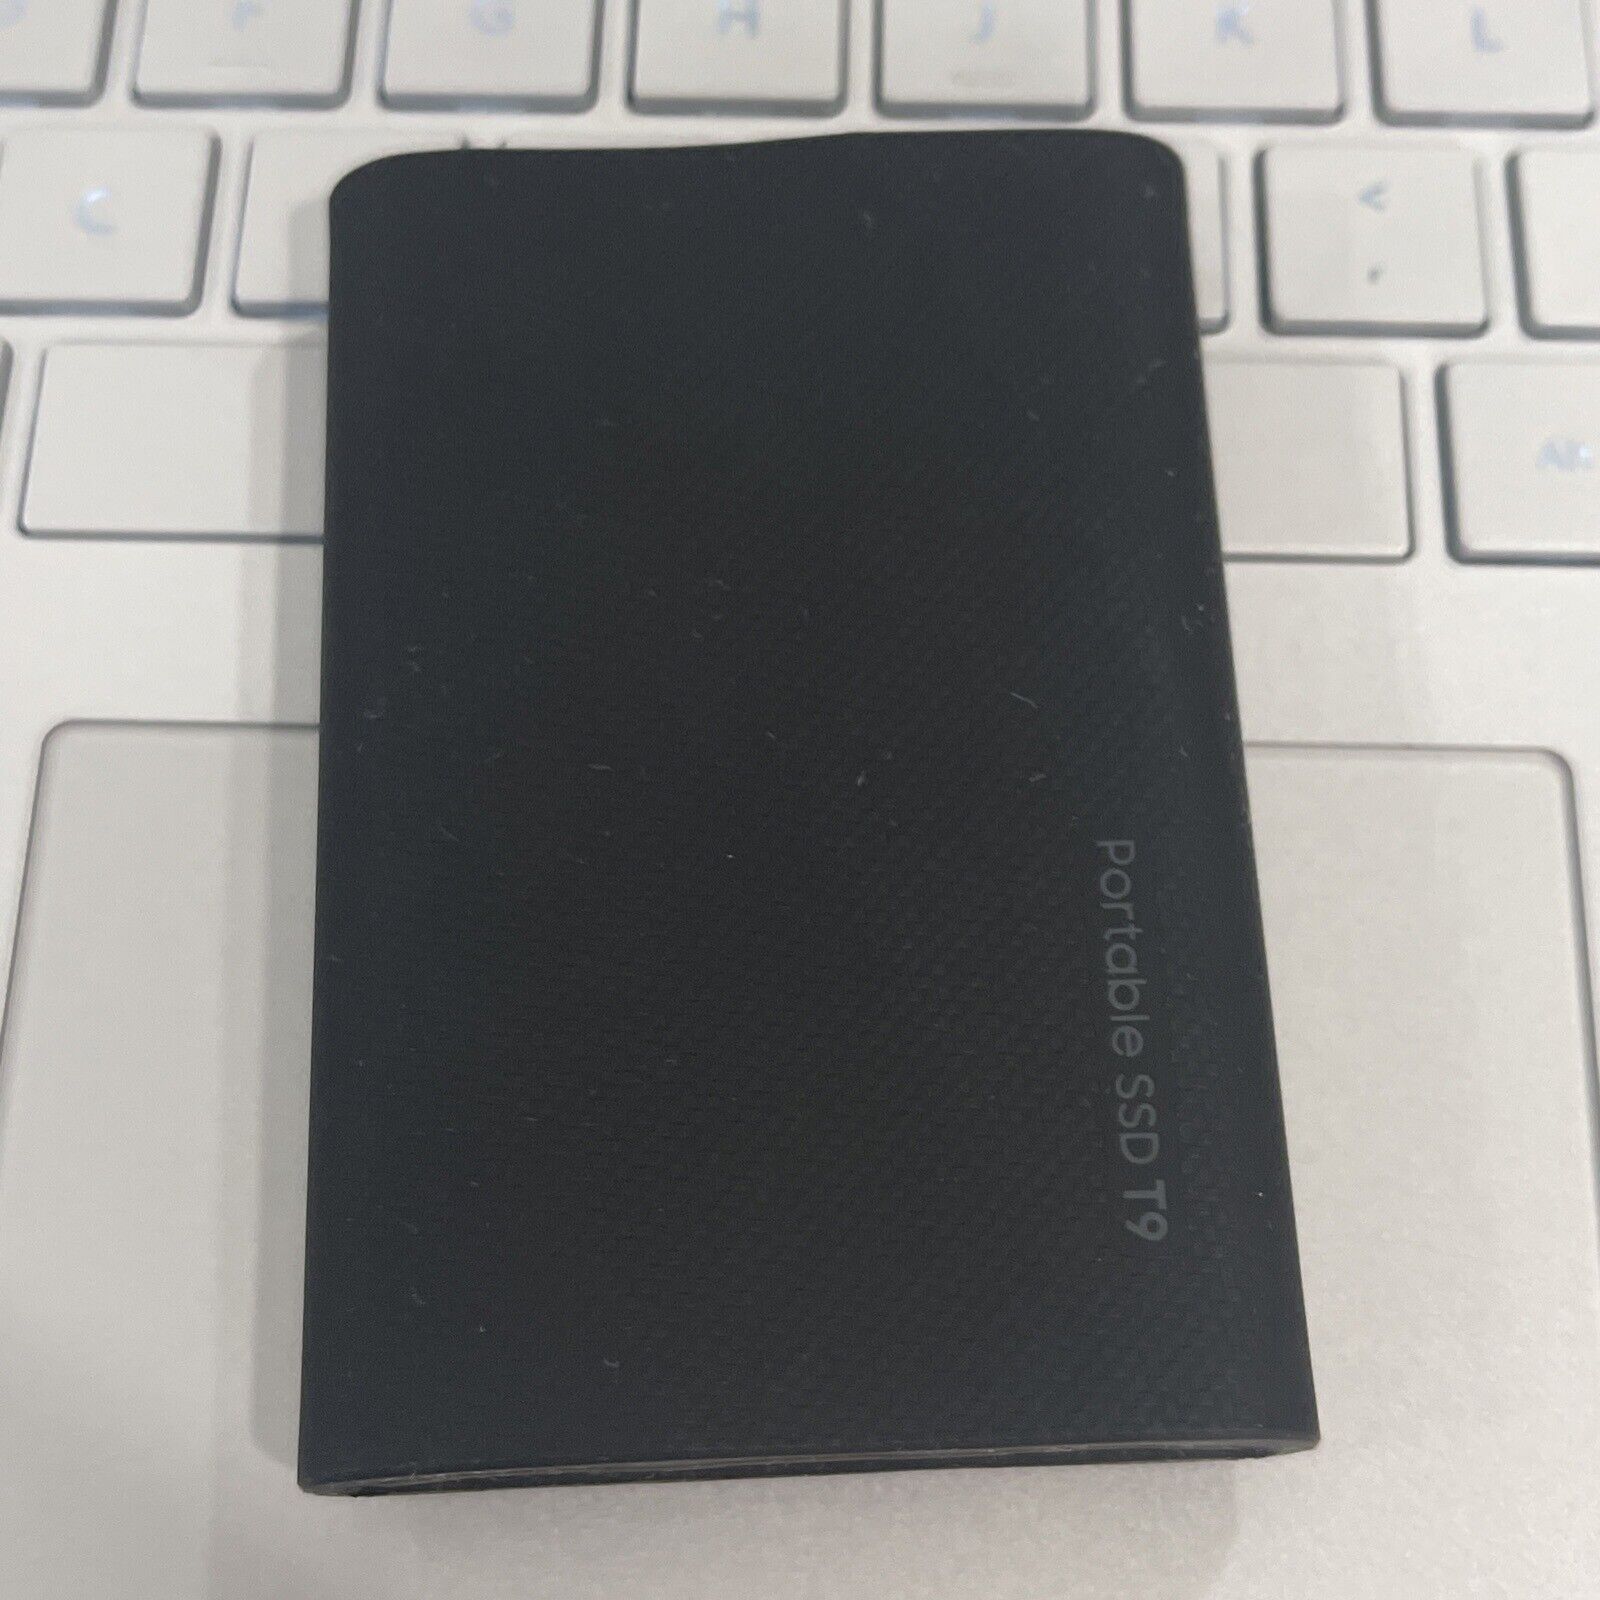 Samsung - T9 Portable SSD 2TB Black, Up to 2,000MB/s, USB 3.2 Gen2 100% health